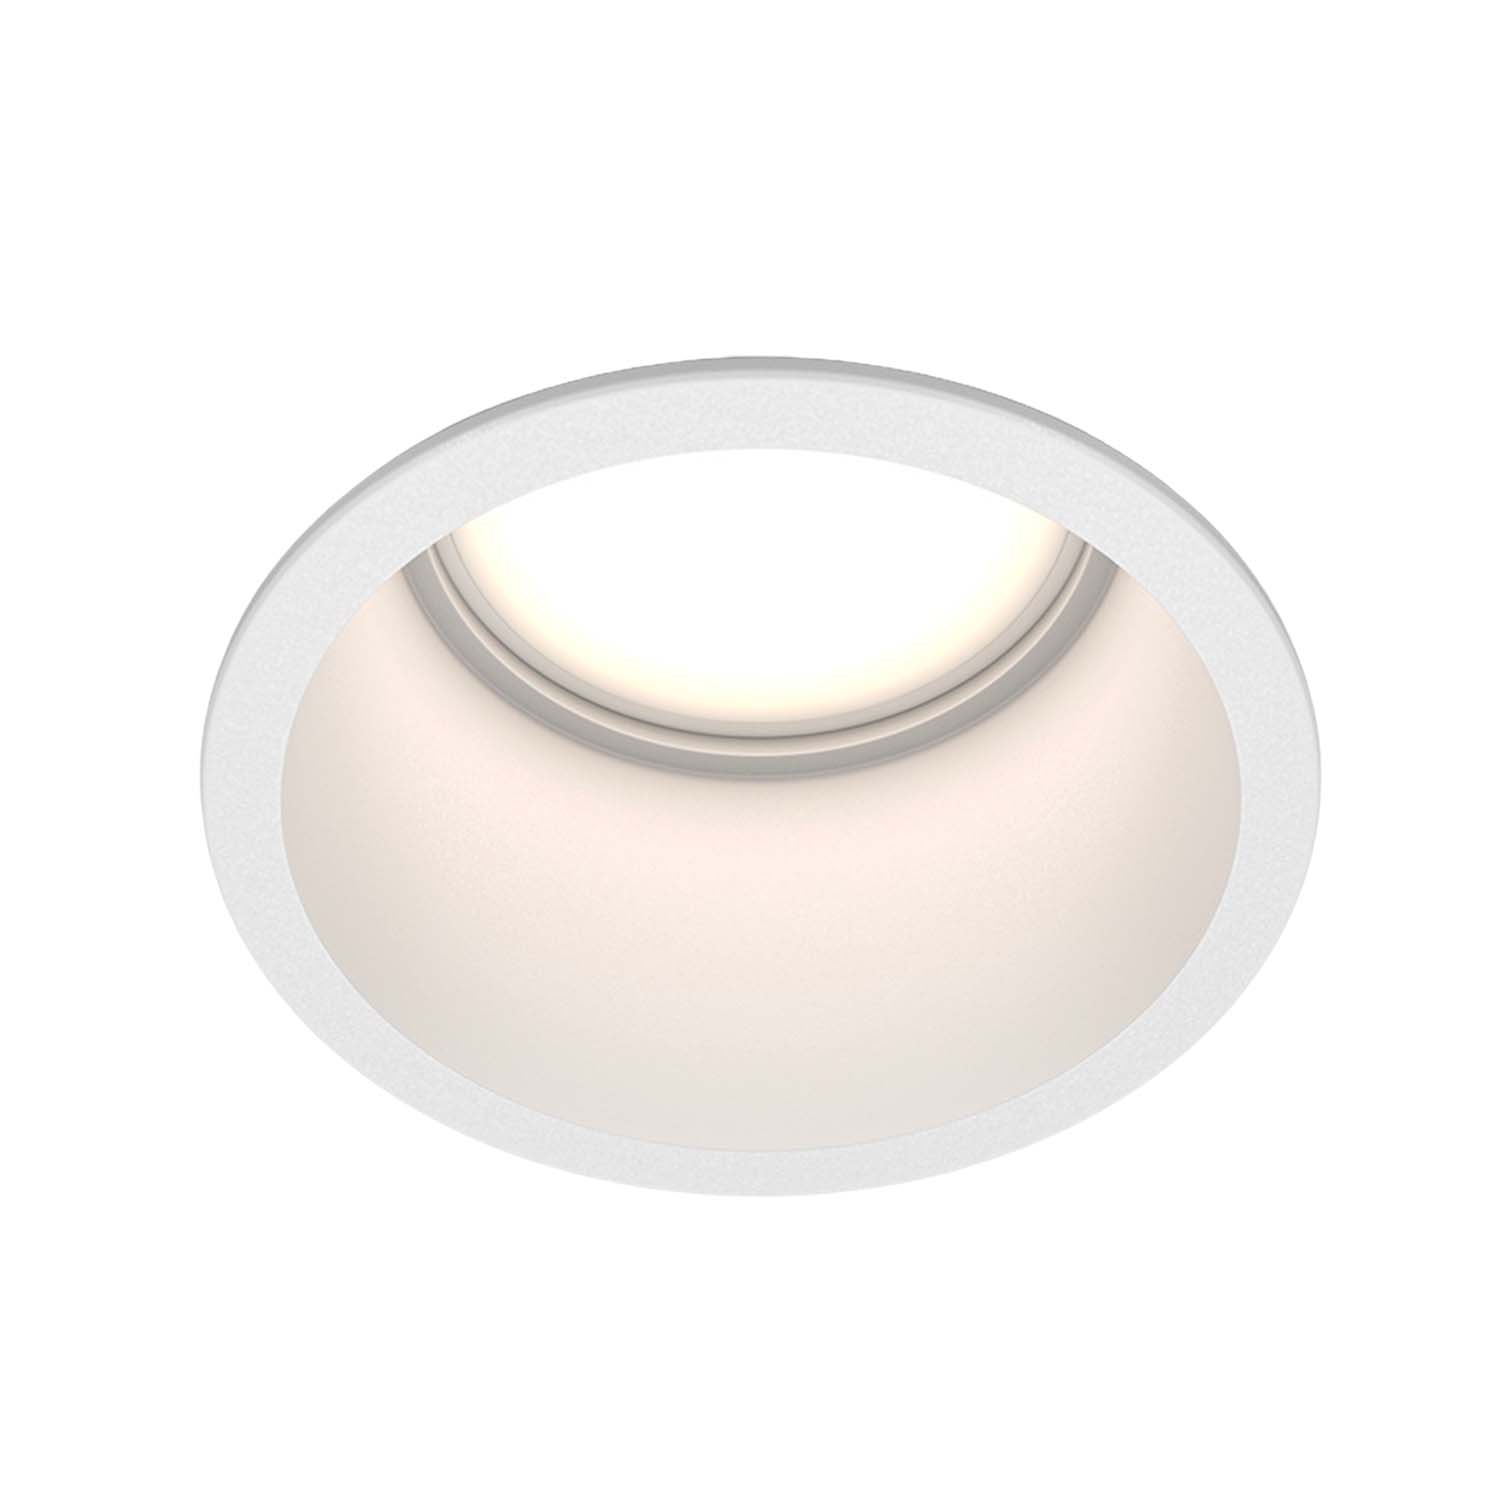 REIF - Designer round recessed spotlight, black, white or gold 68mm